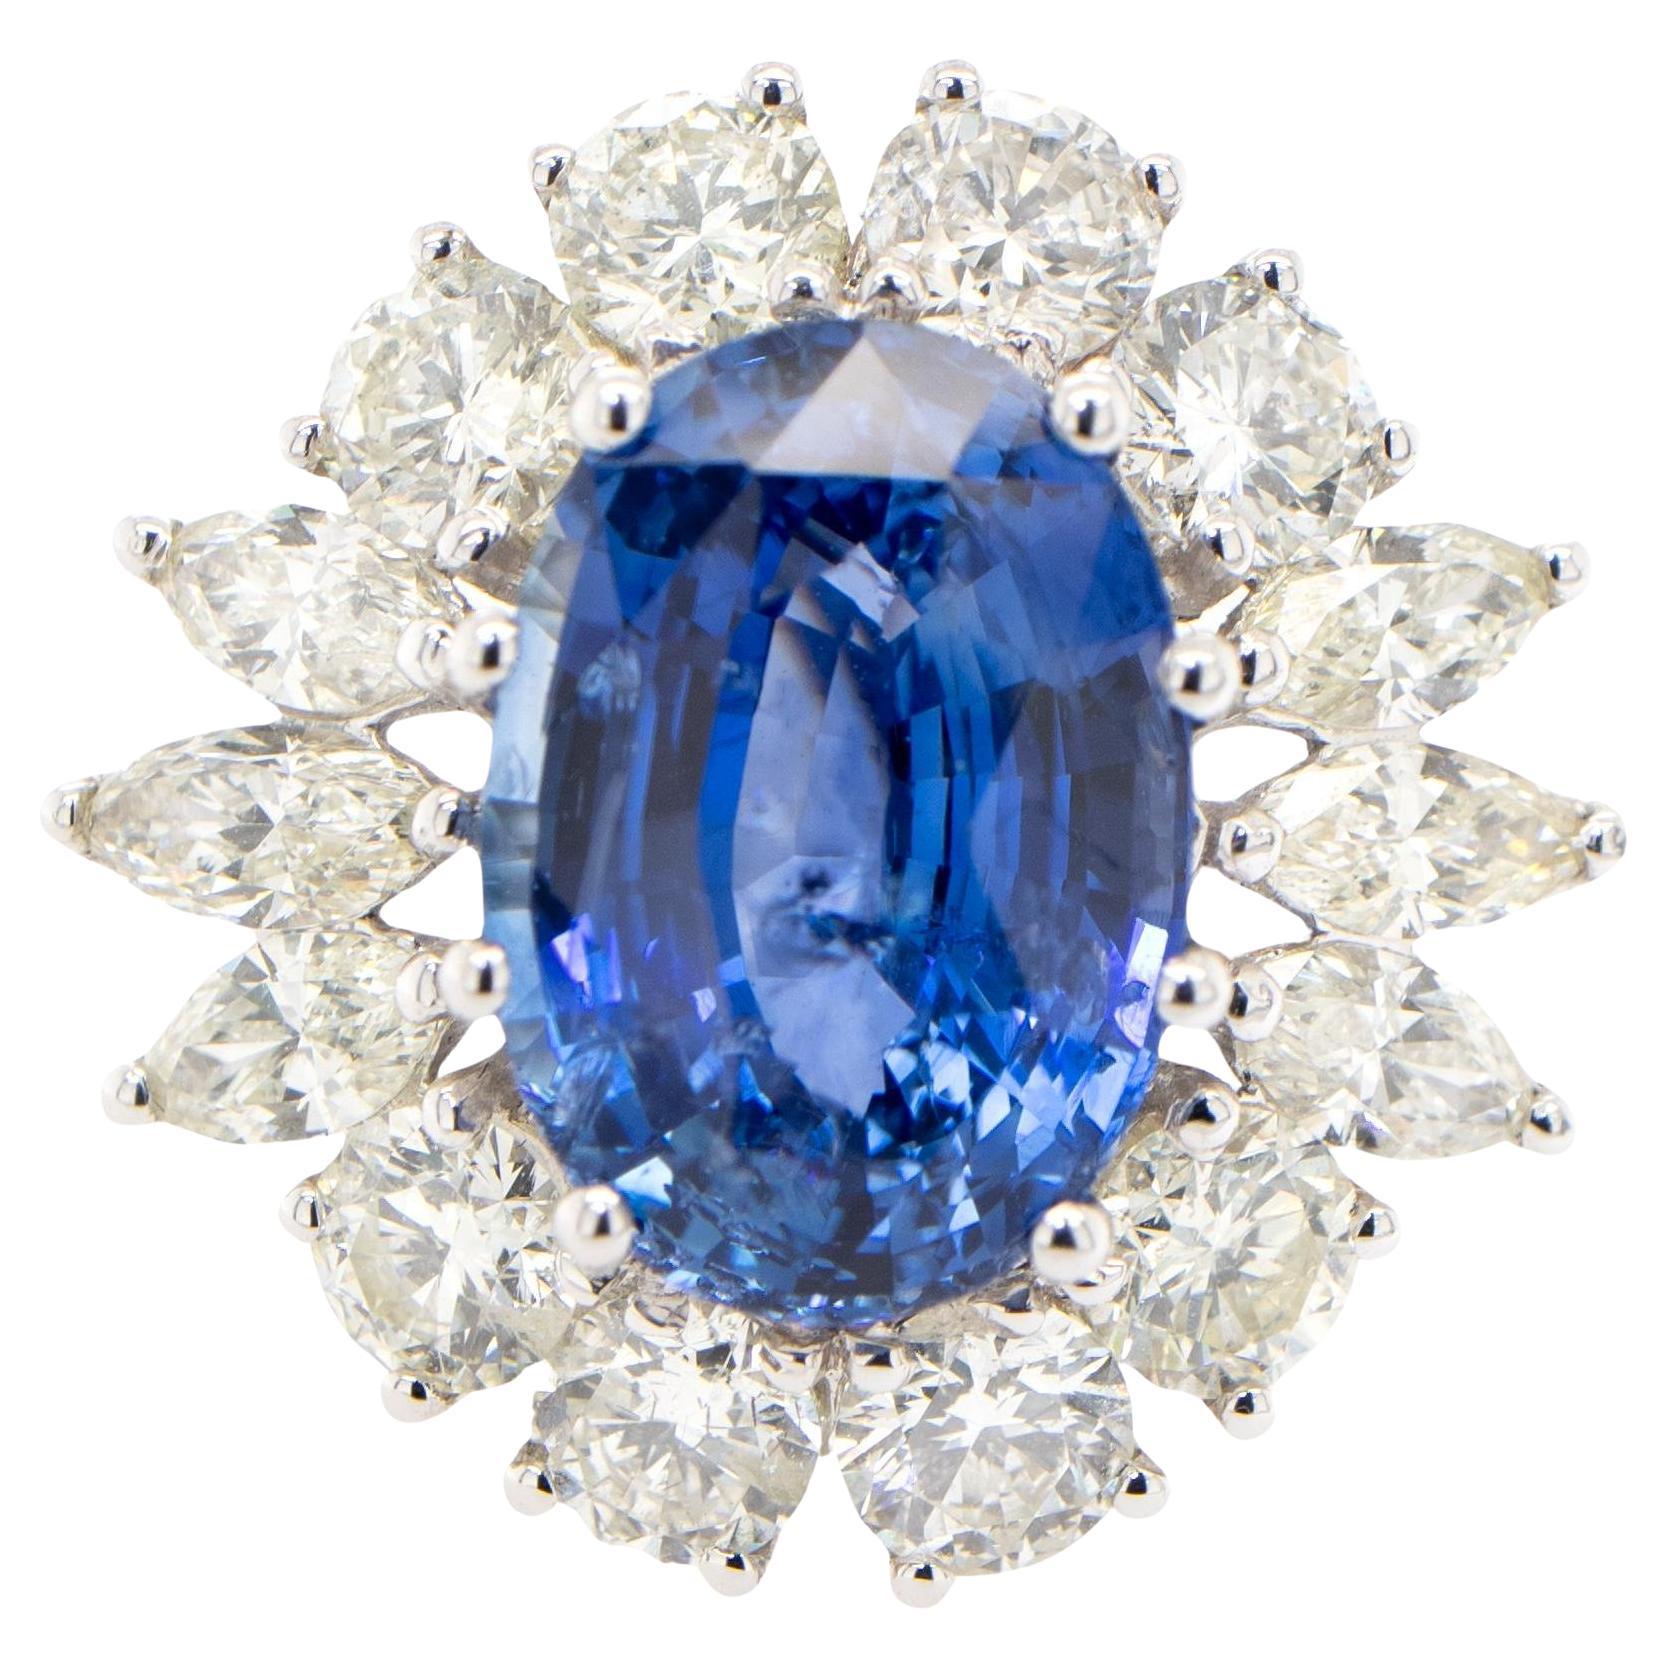 IDL Certified Ceylon Sapphire Ring Large Diamond Halo 6.26 Carats 18K Gold